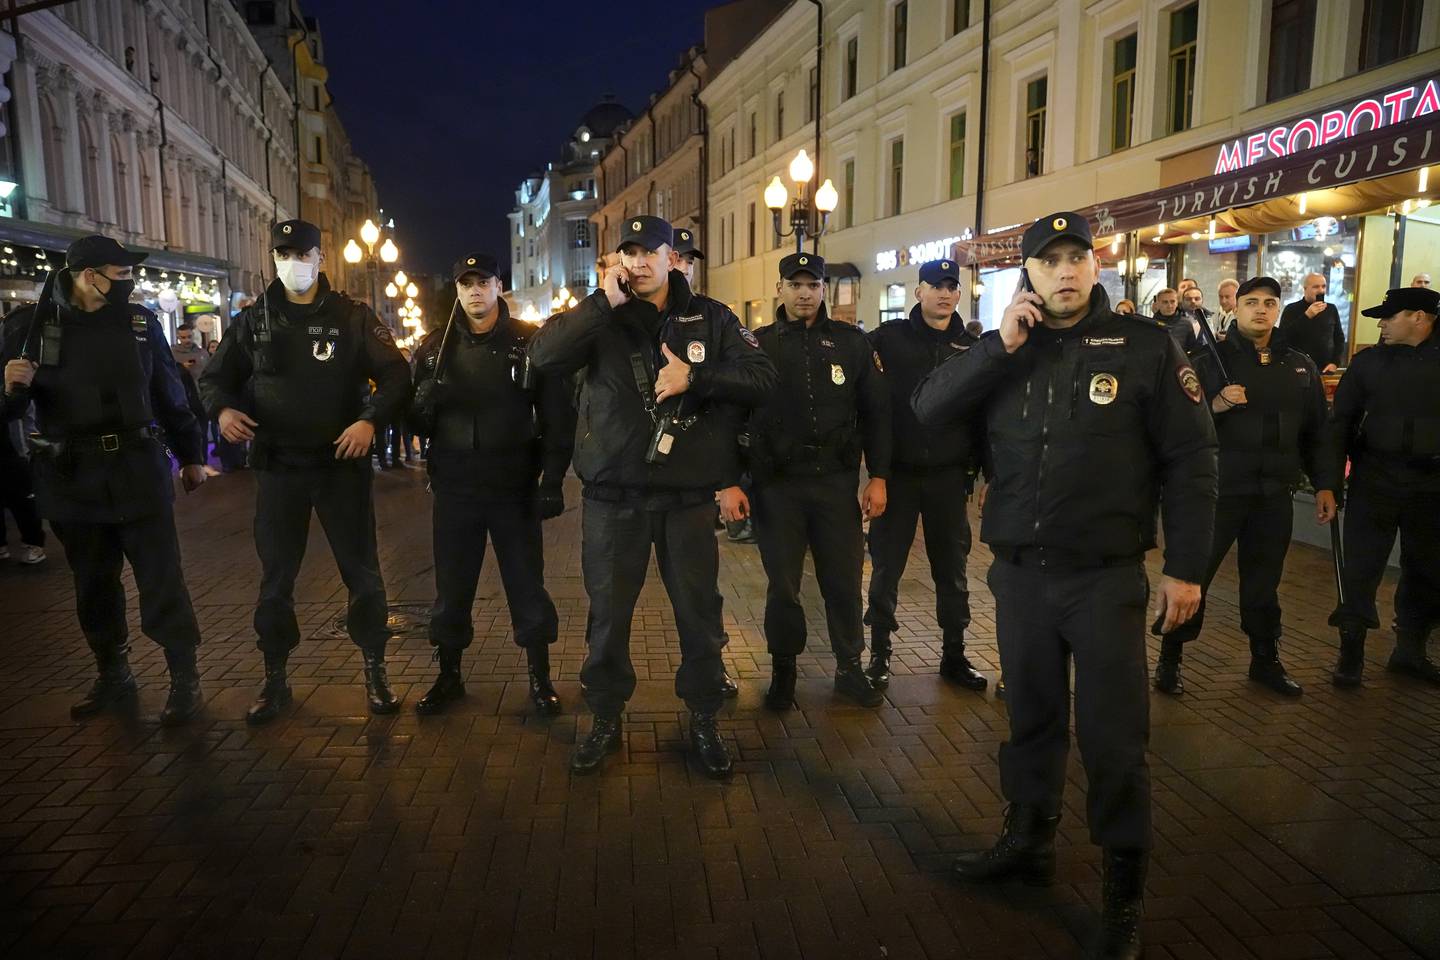 Russisk politi i gatene i Moskva. Foto: Aleksander Zemlianitsjenko / AP / NTB